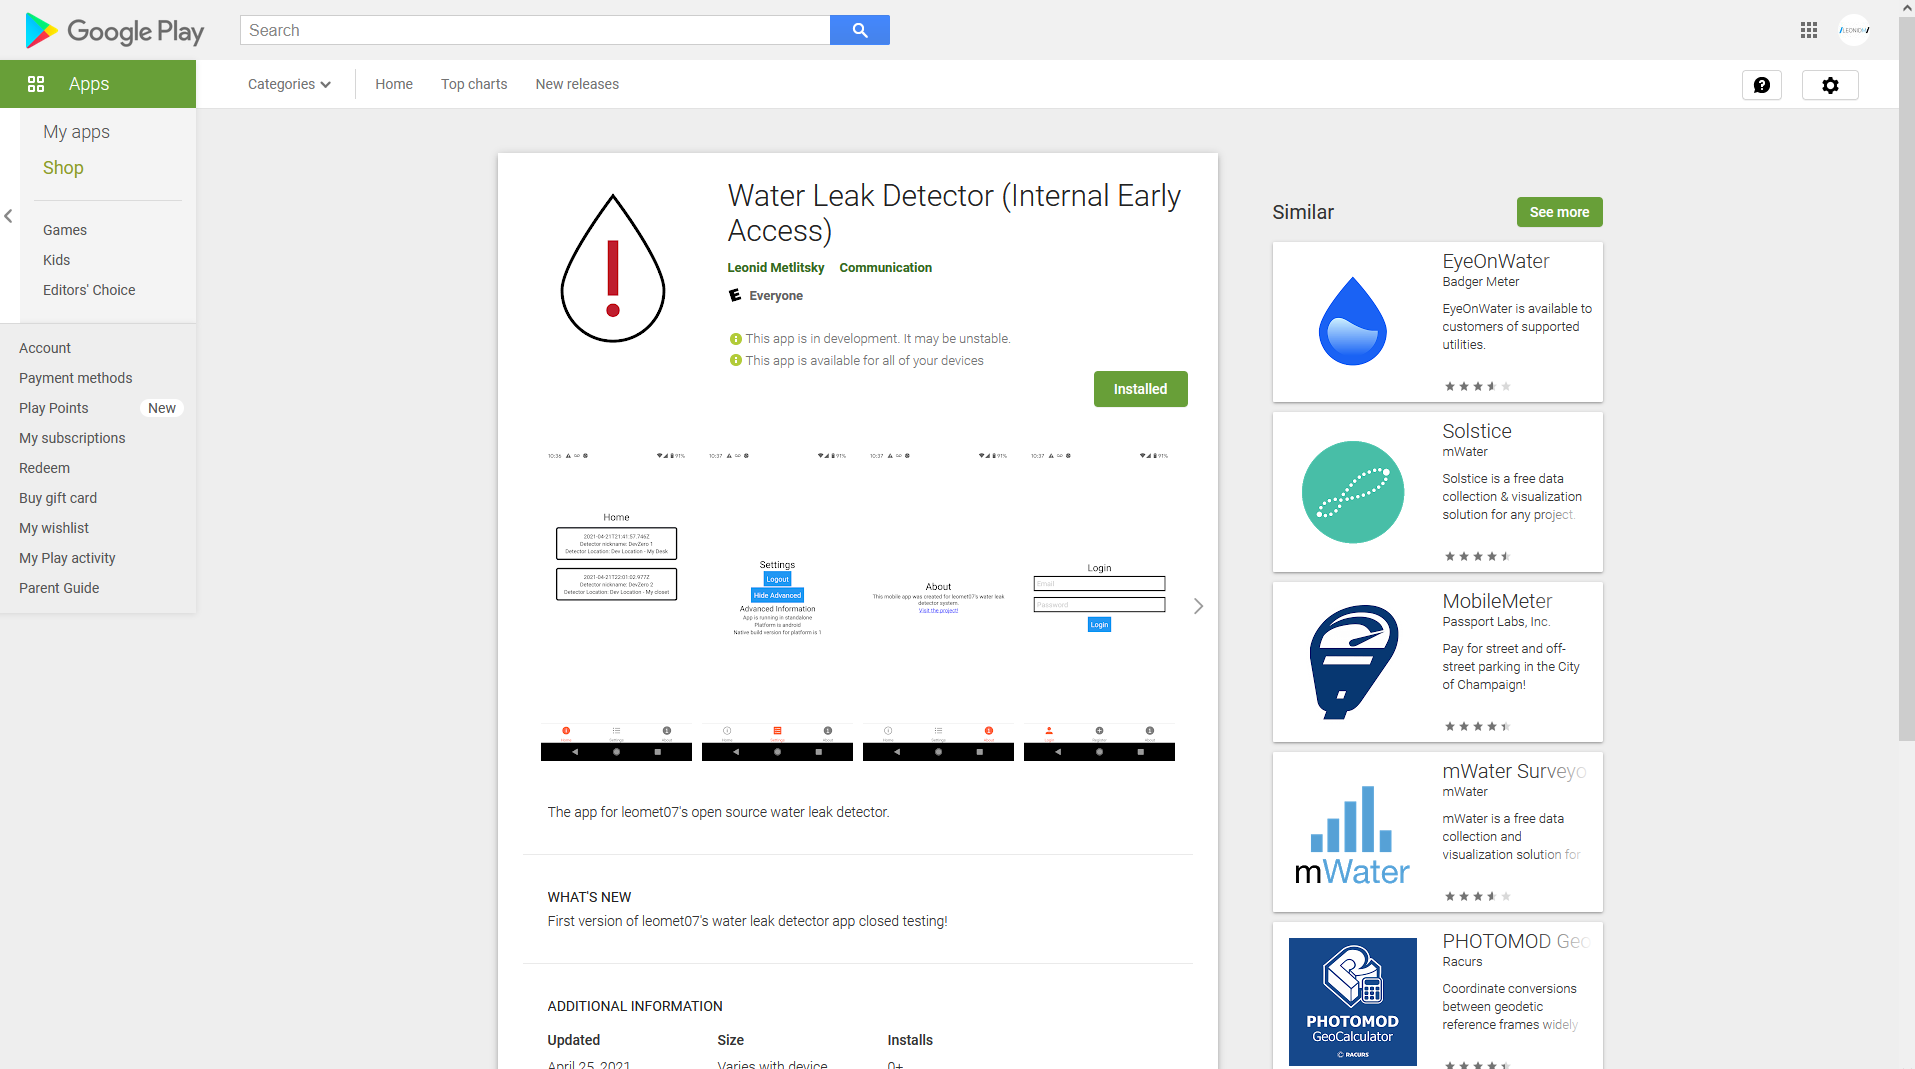 Water Leak Detector Image